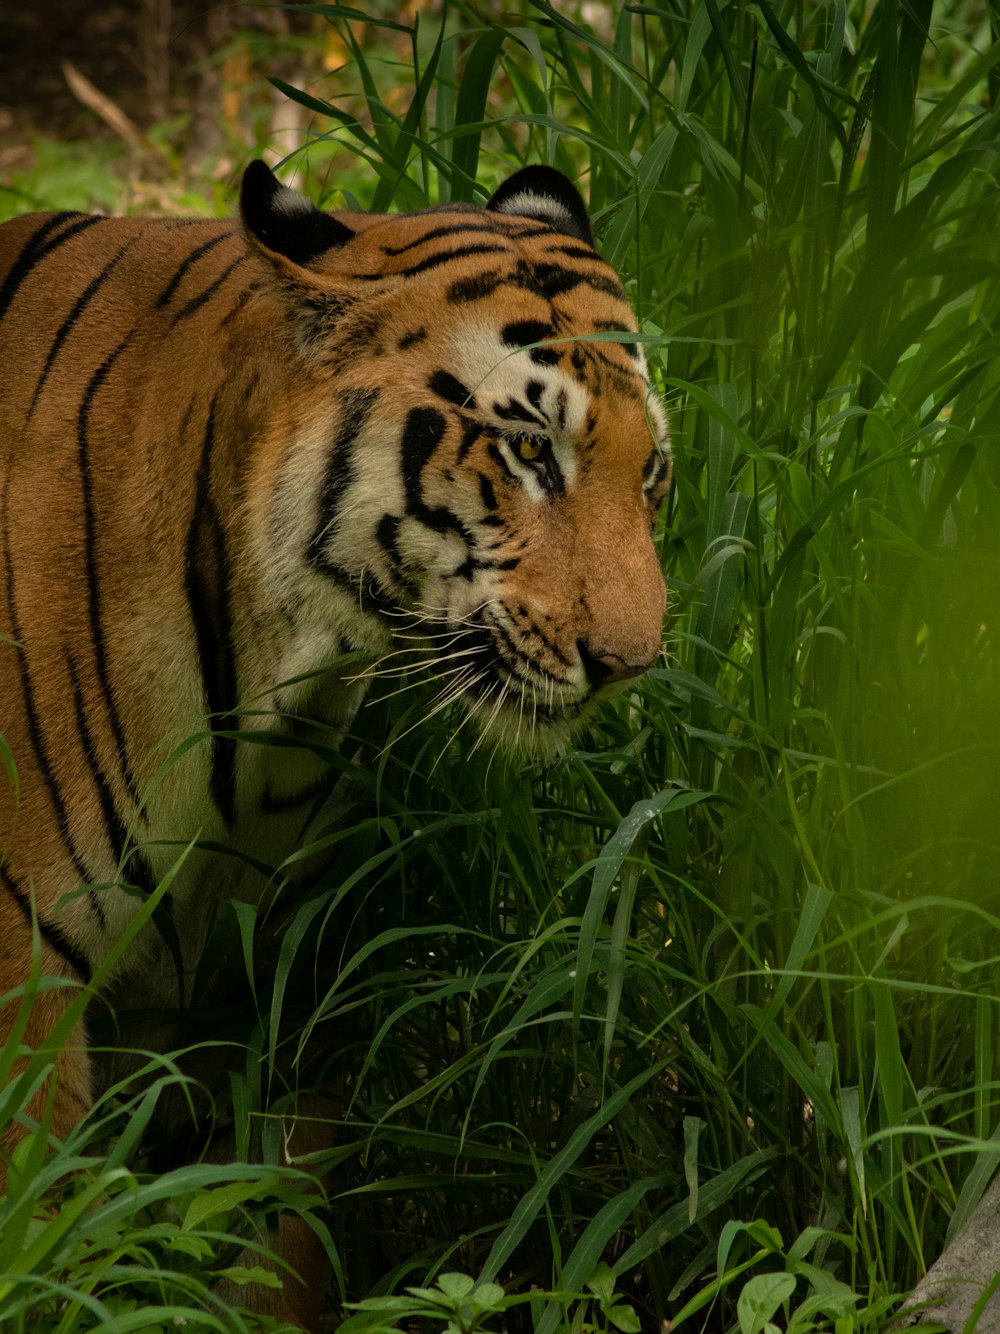 Un tigre caminando por un frondoso bosque verde